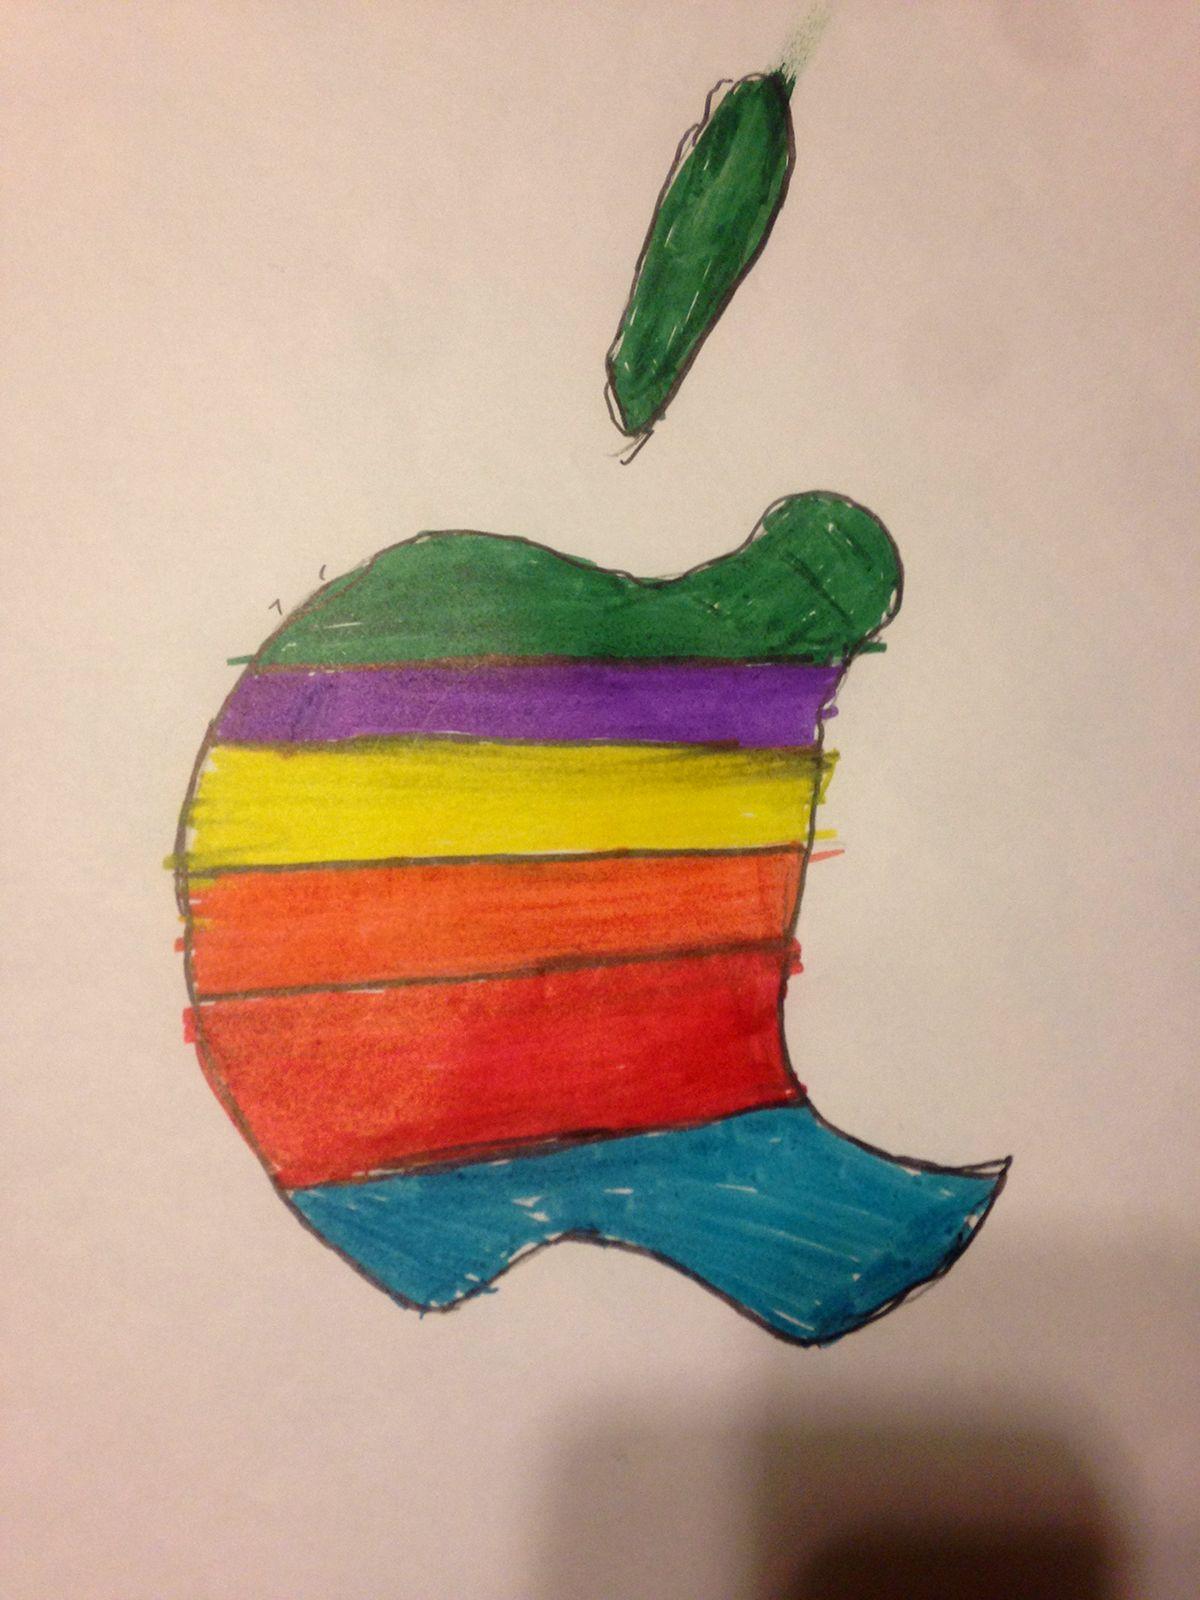 Old Apple Logo - old apple logo interprtitation on Behance